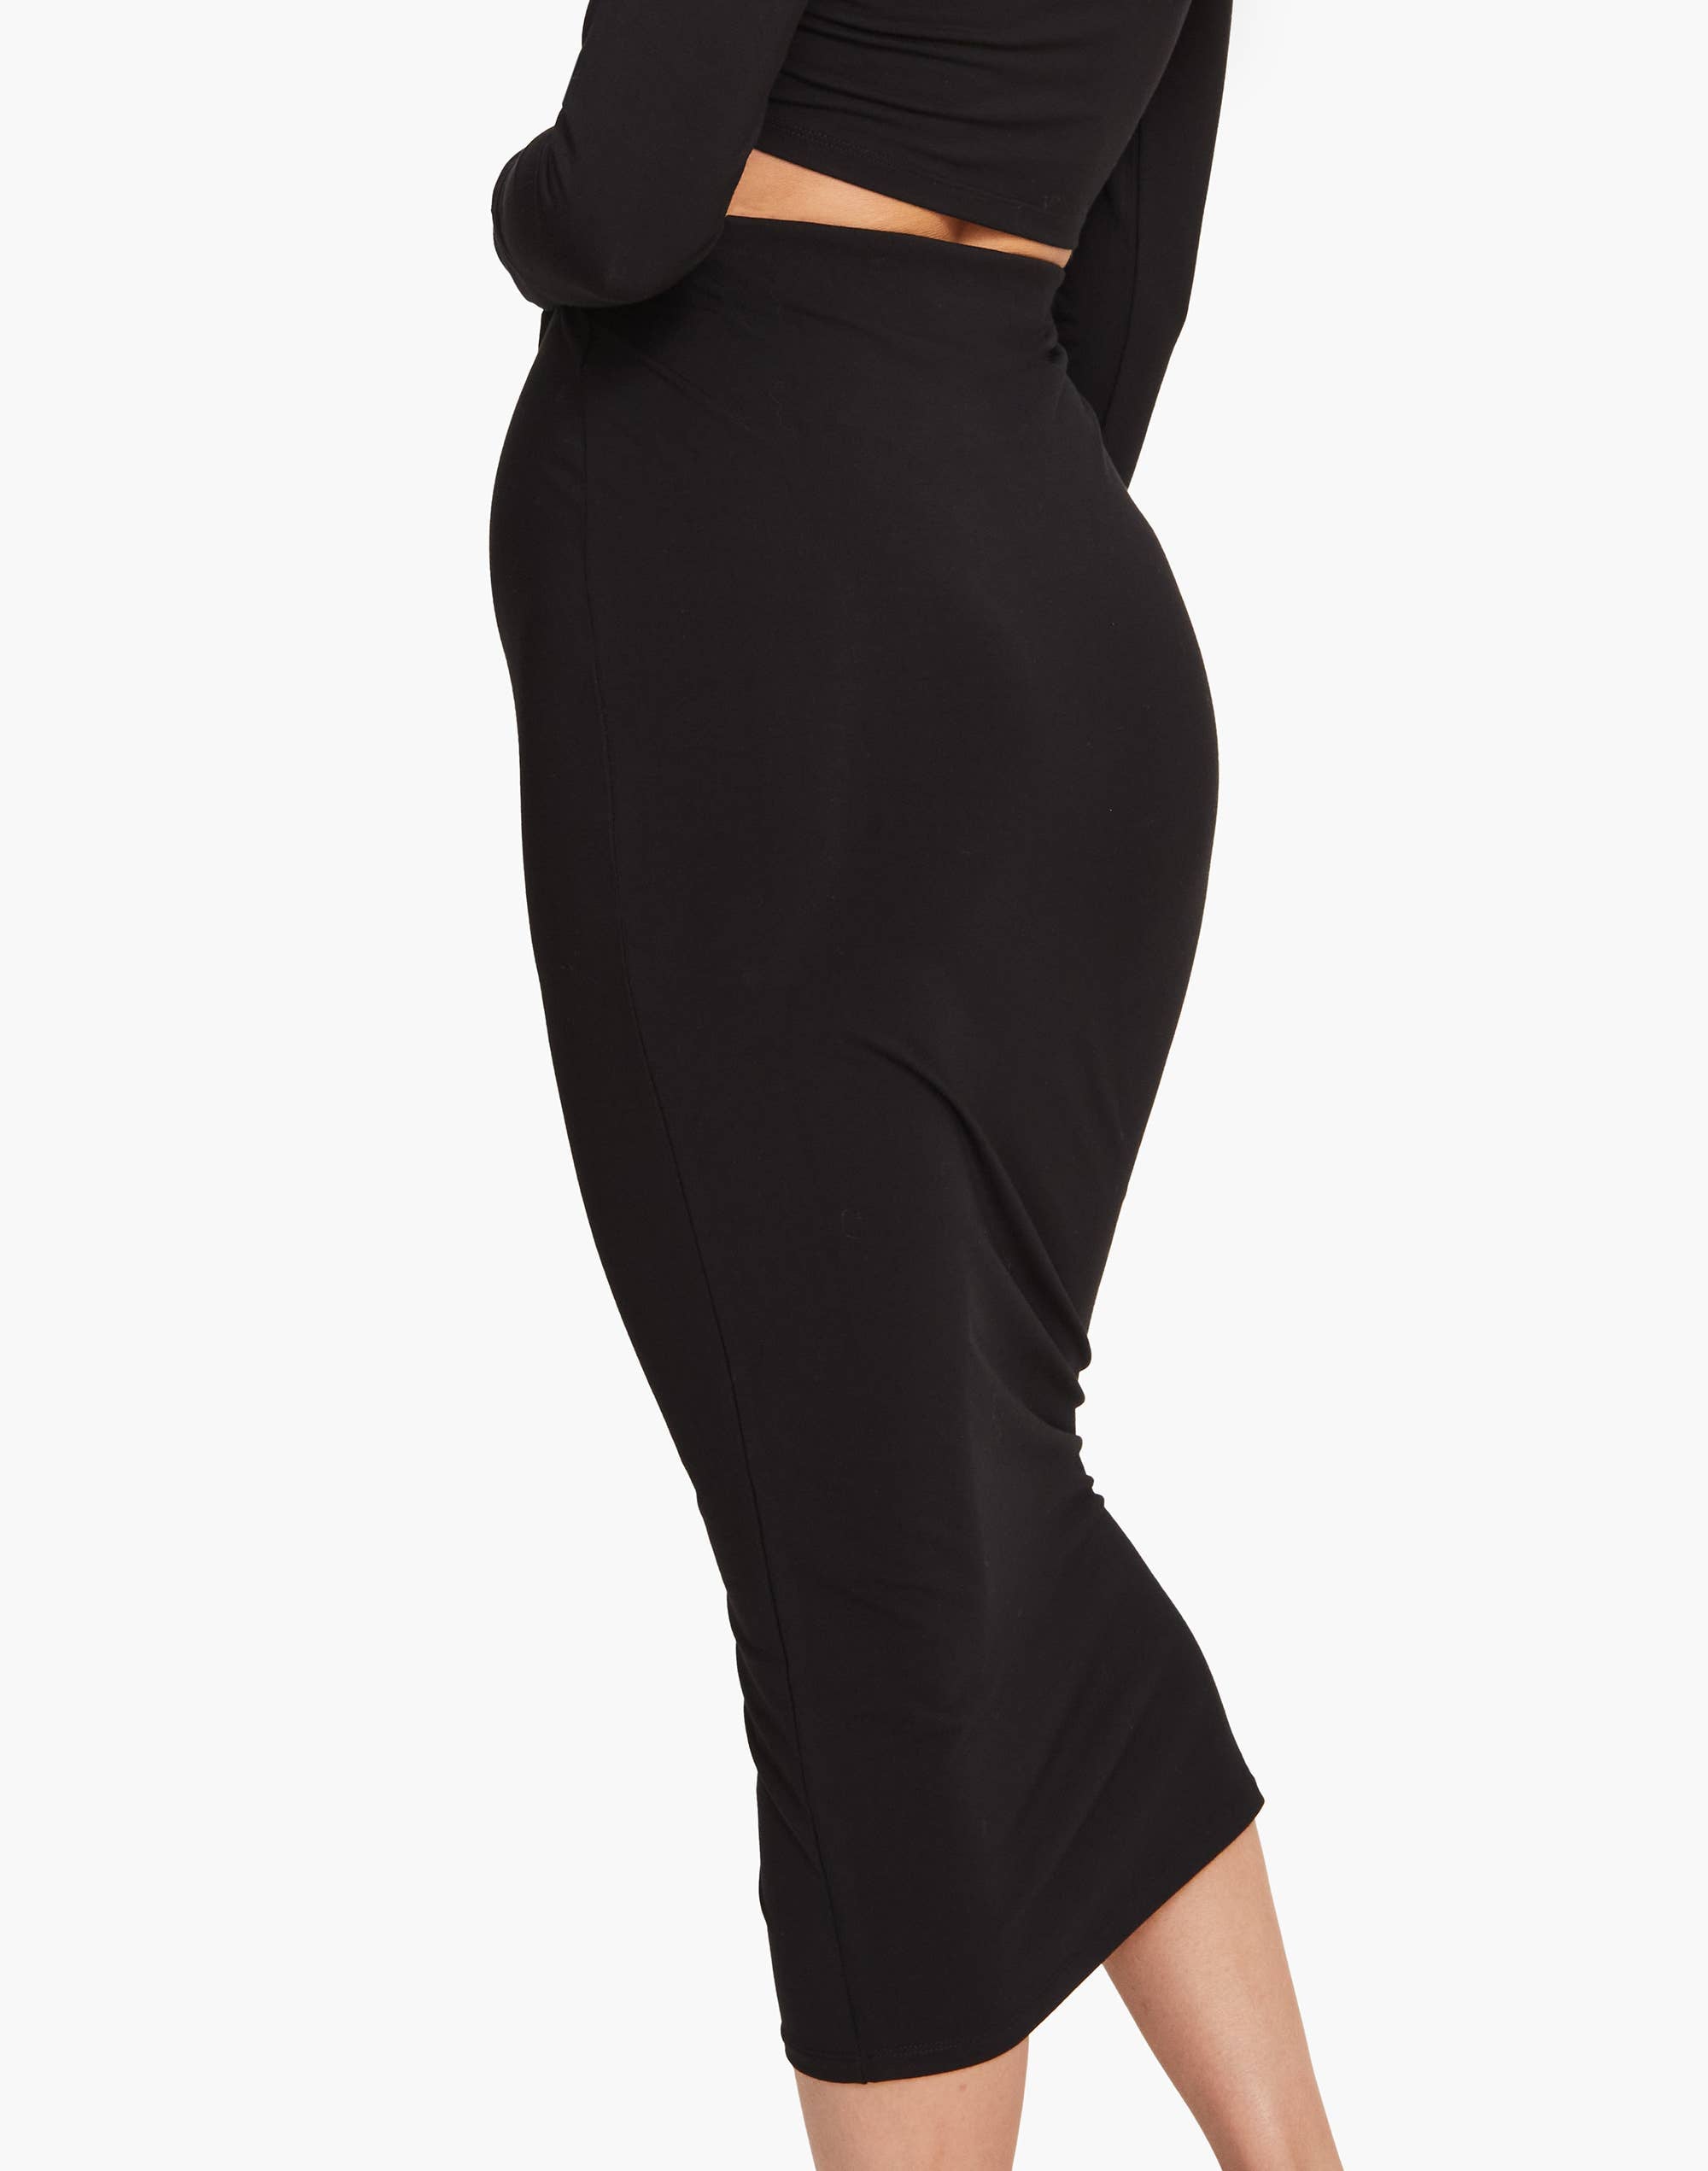 The Body Midi Skirt: Black / S